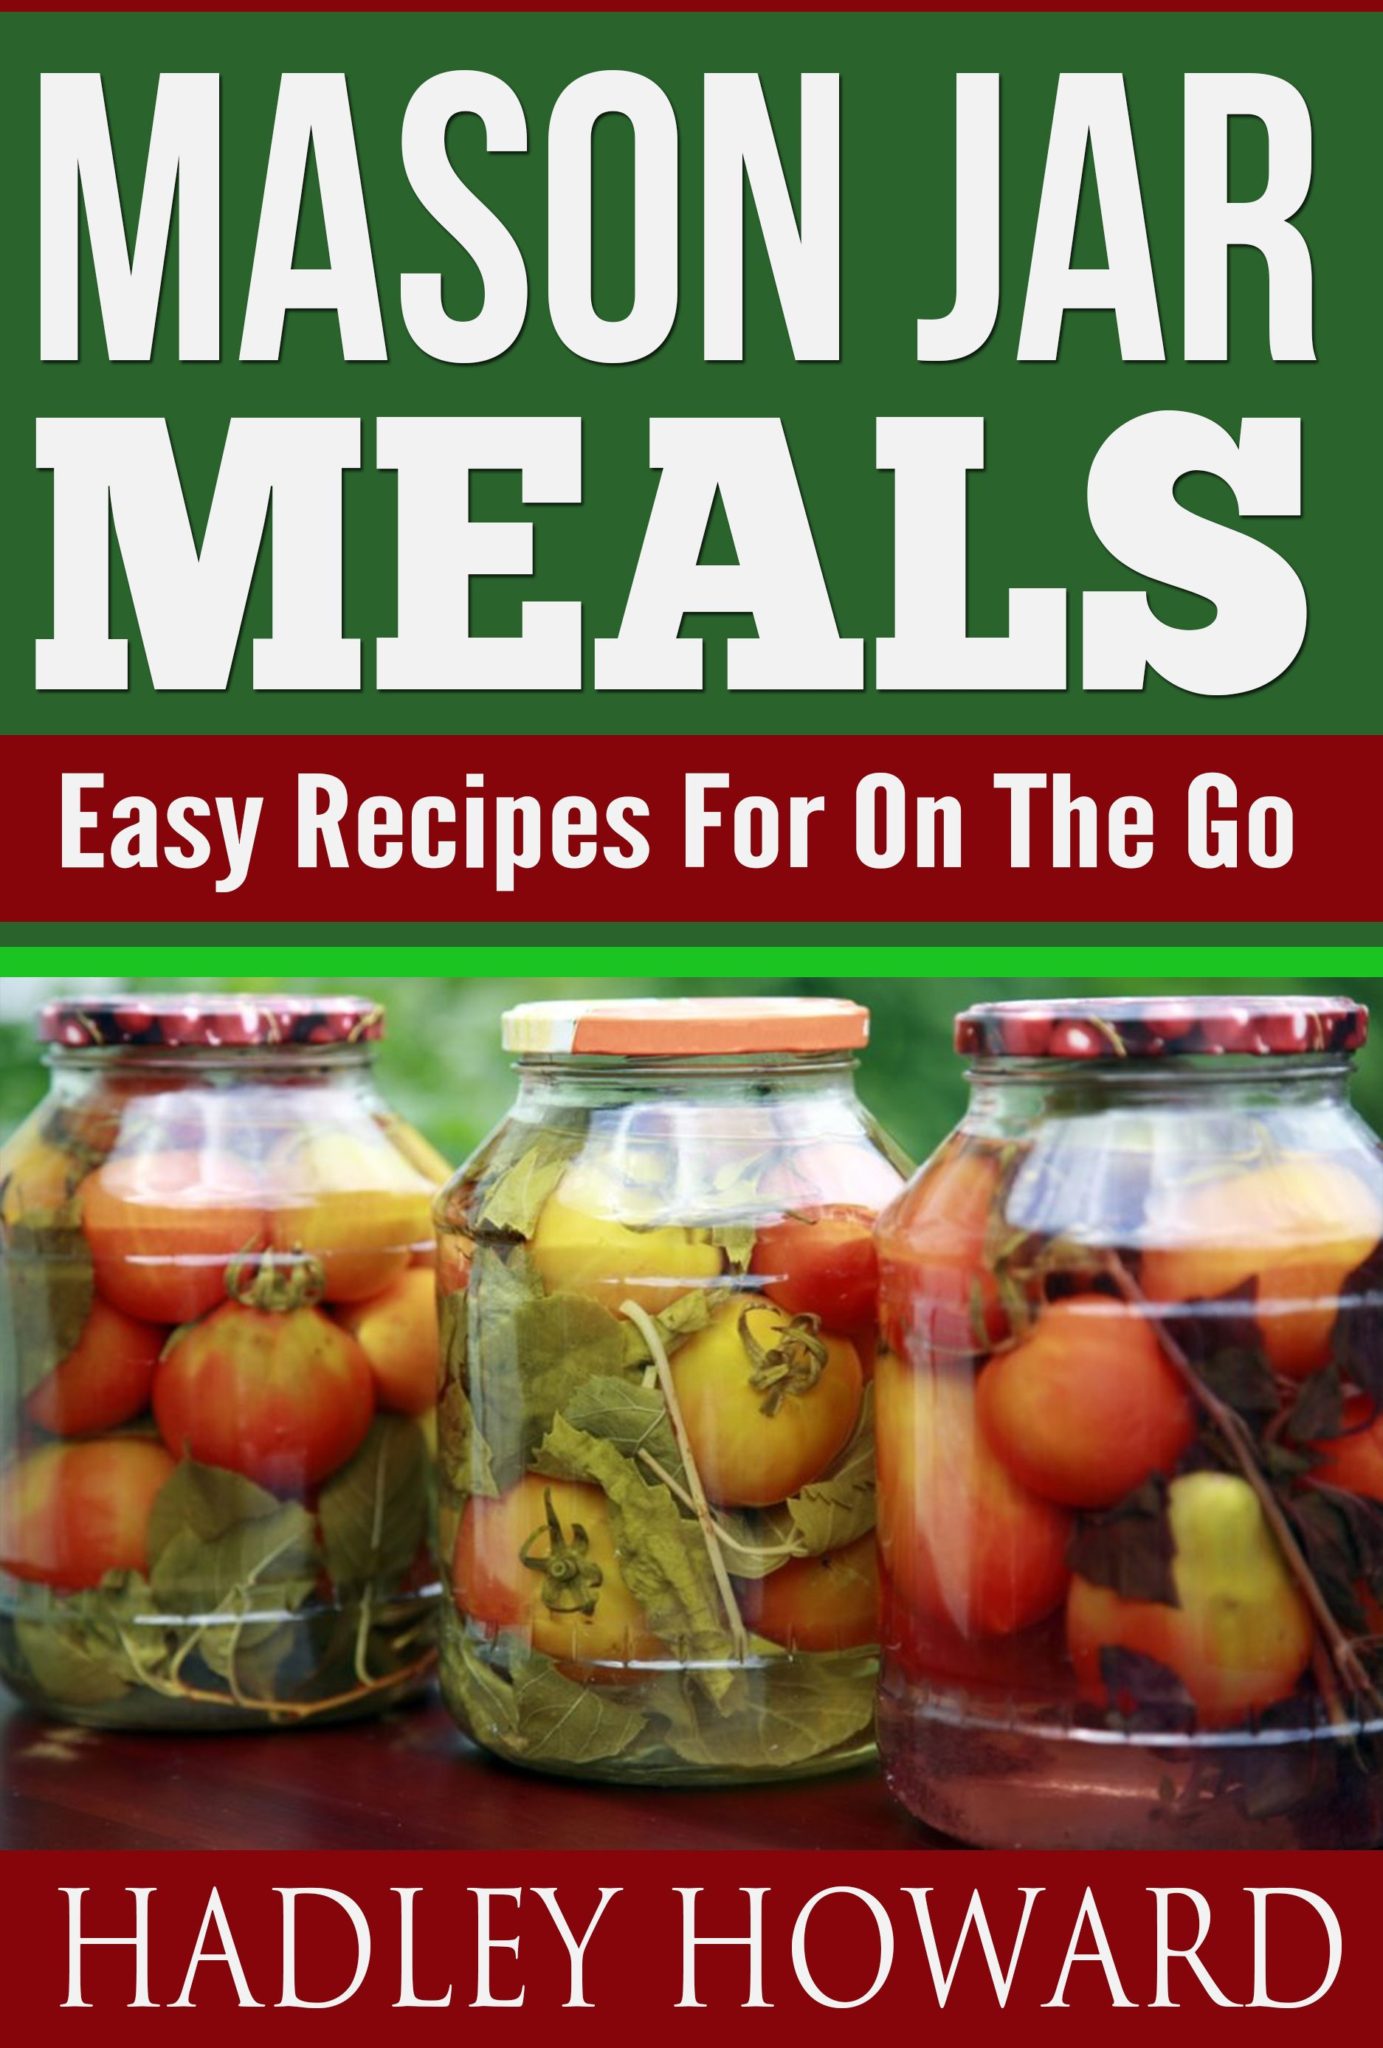 Mason Jar Meals – Easy Recipes For On The Go by Hadley Howard